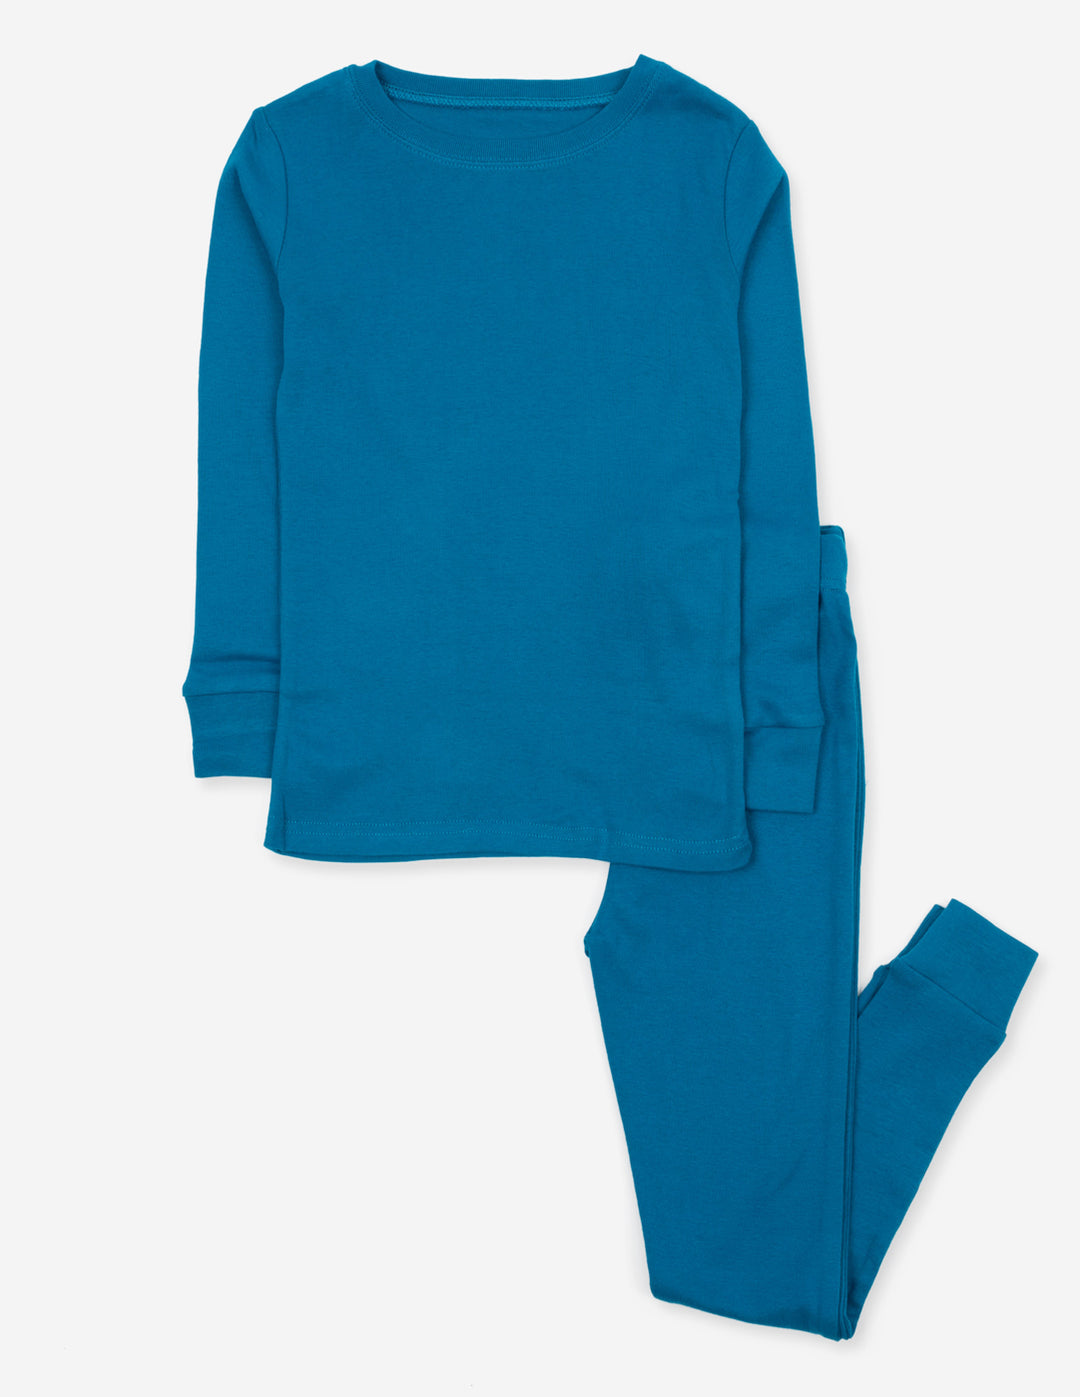 solid color teal blue kids cotton pajama